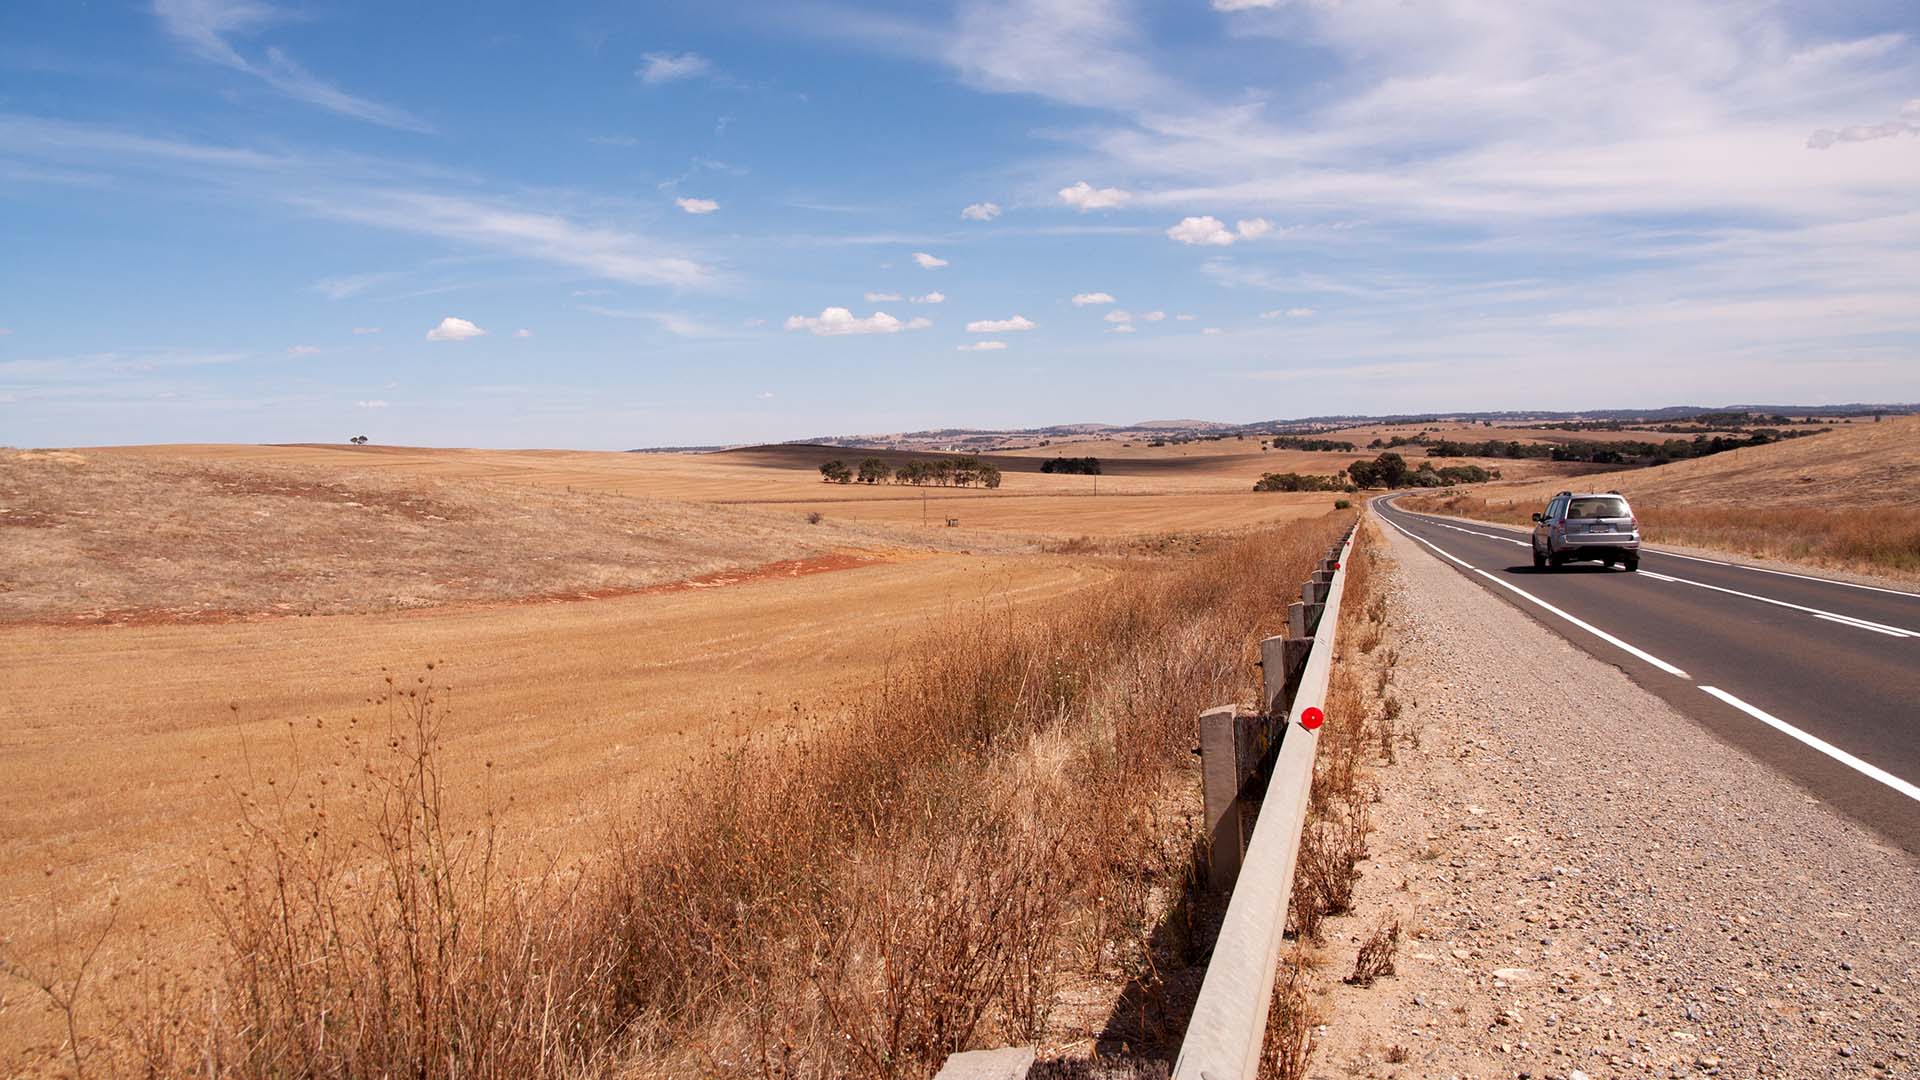 Weeds alongside a road in drought stricken rural Australia